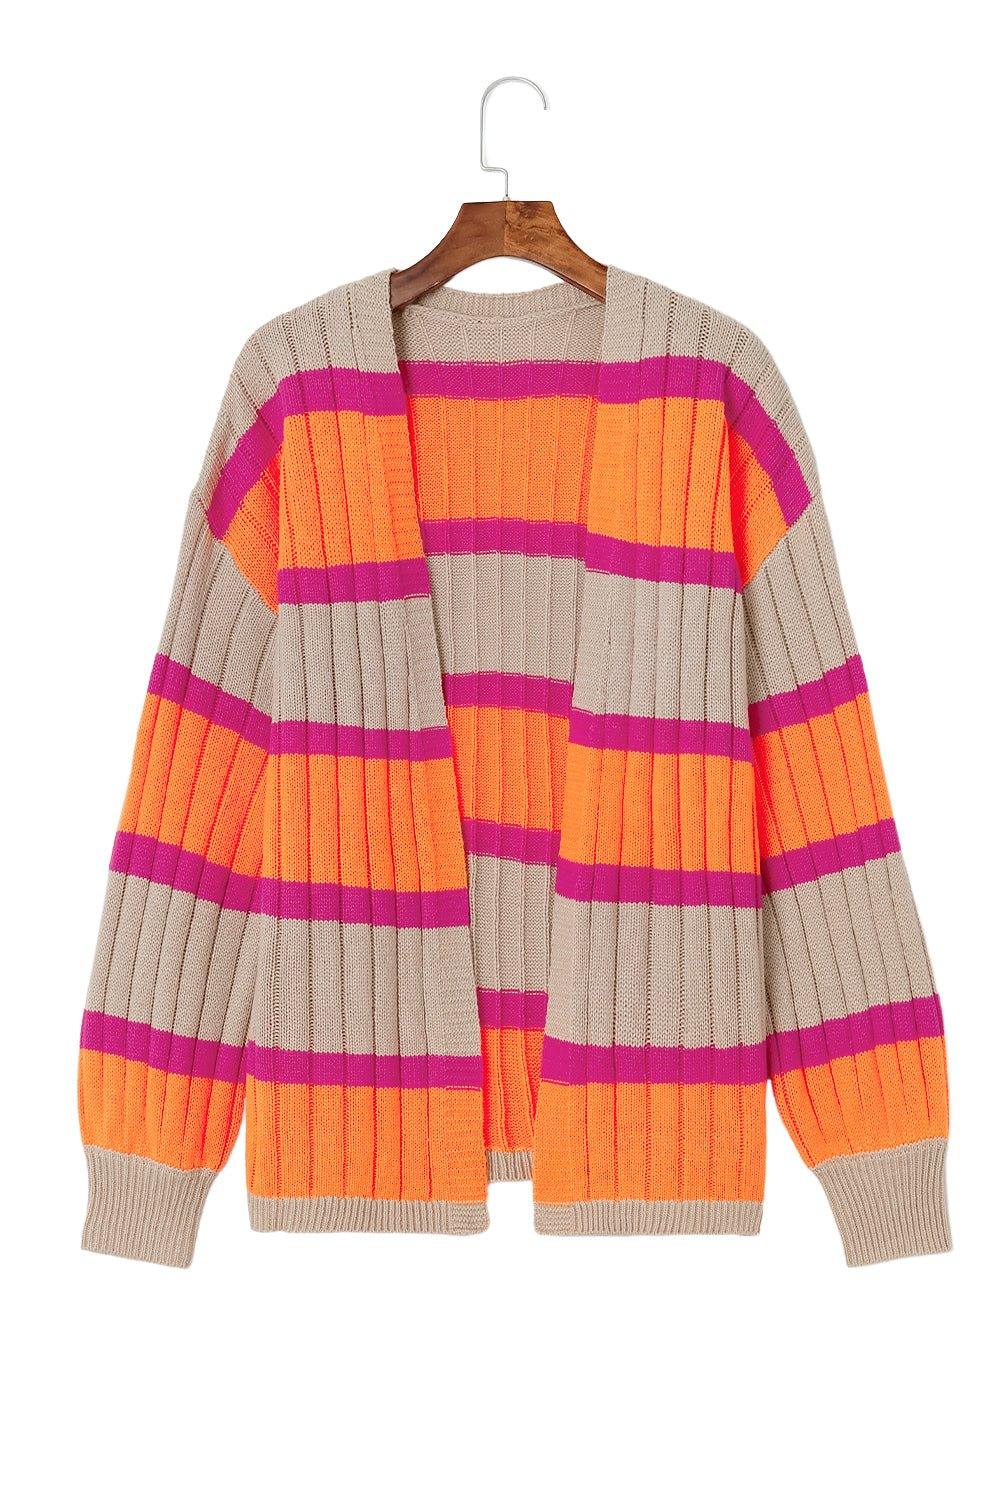 Slouchy Orange Striped Cardigan - Klazzi Fashion Boutique